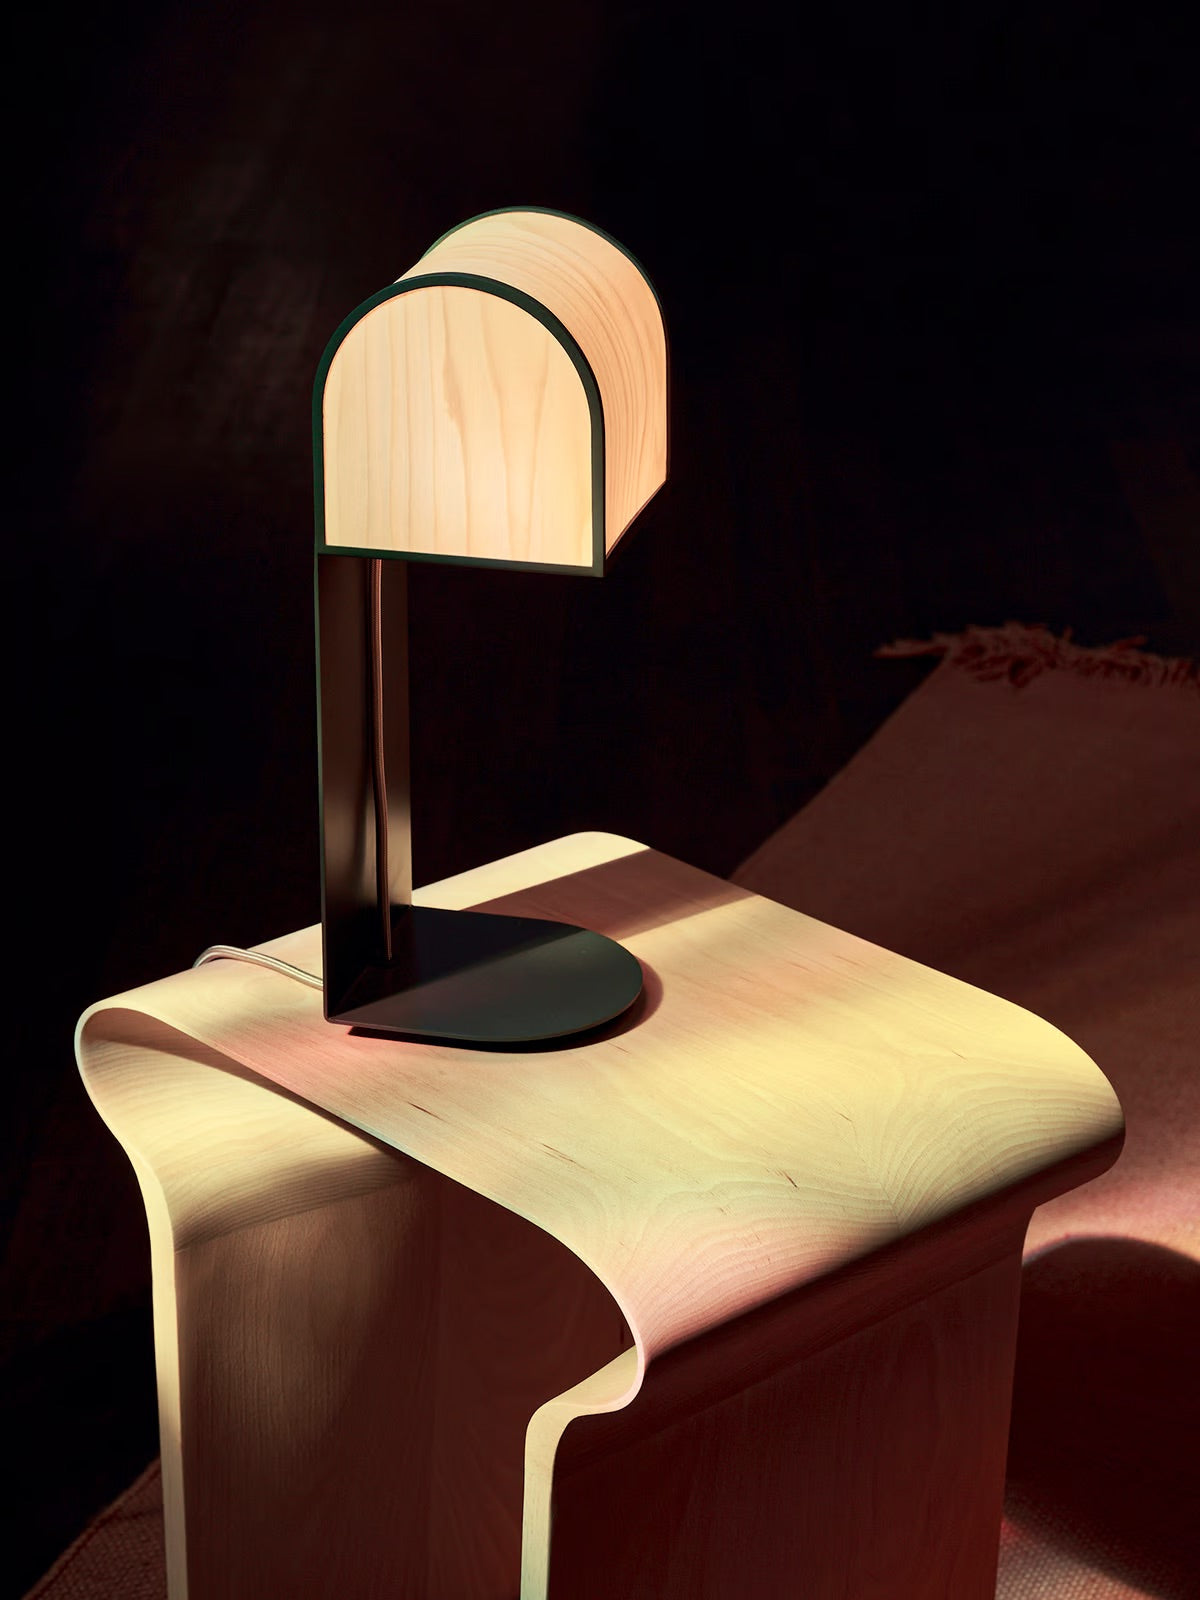 Pink Wood Veneer Table lamp. Boho Chic Table lamp, Bohemian chic table lamp. table lamp design. small table lamp